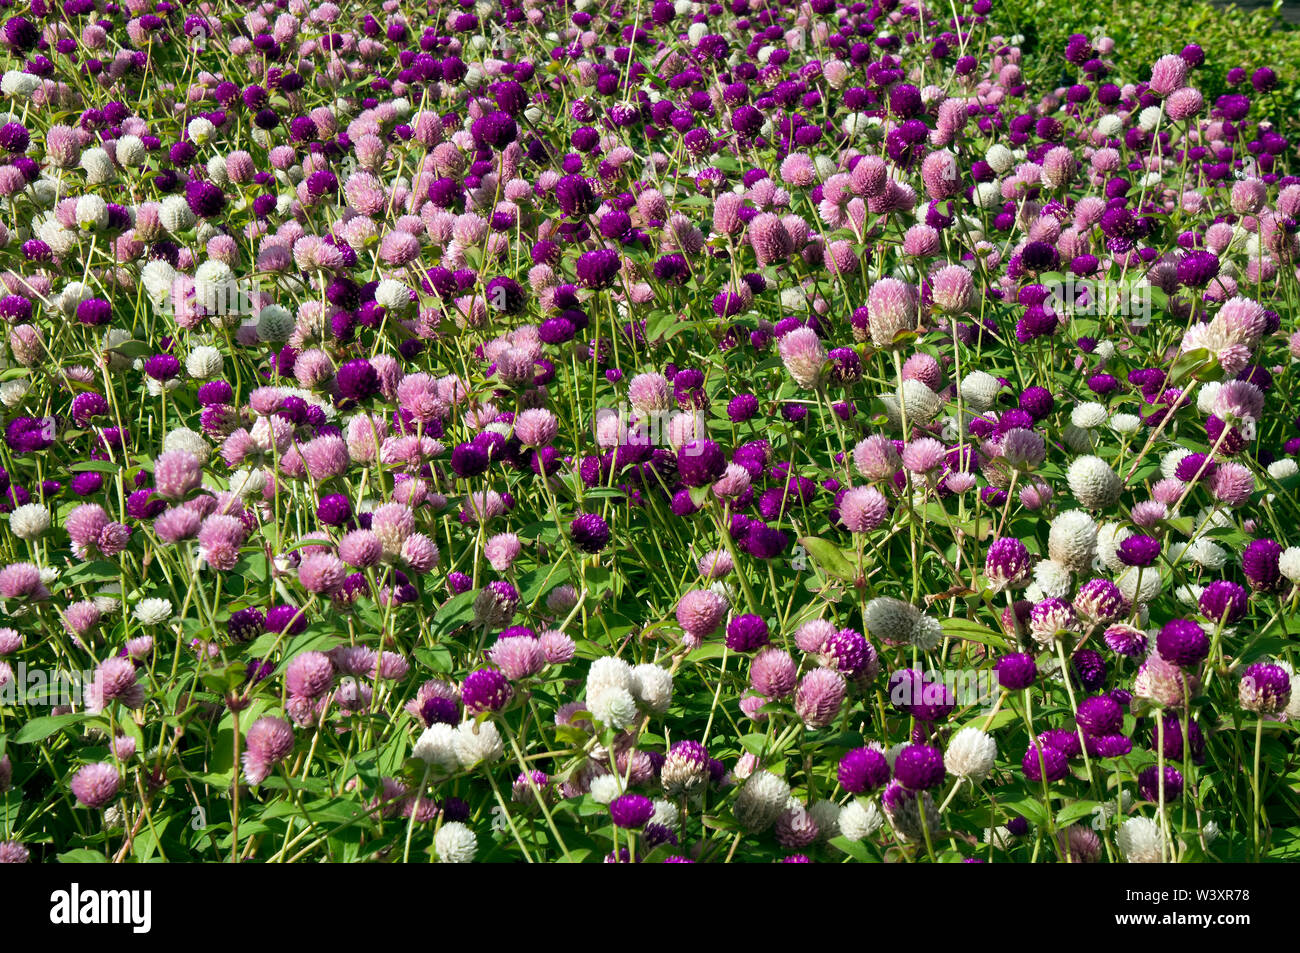 Sydney Australia, field of globe amaranth flowers native to Brazil, Panama, and Guatemala Stock Photo